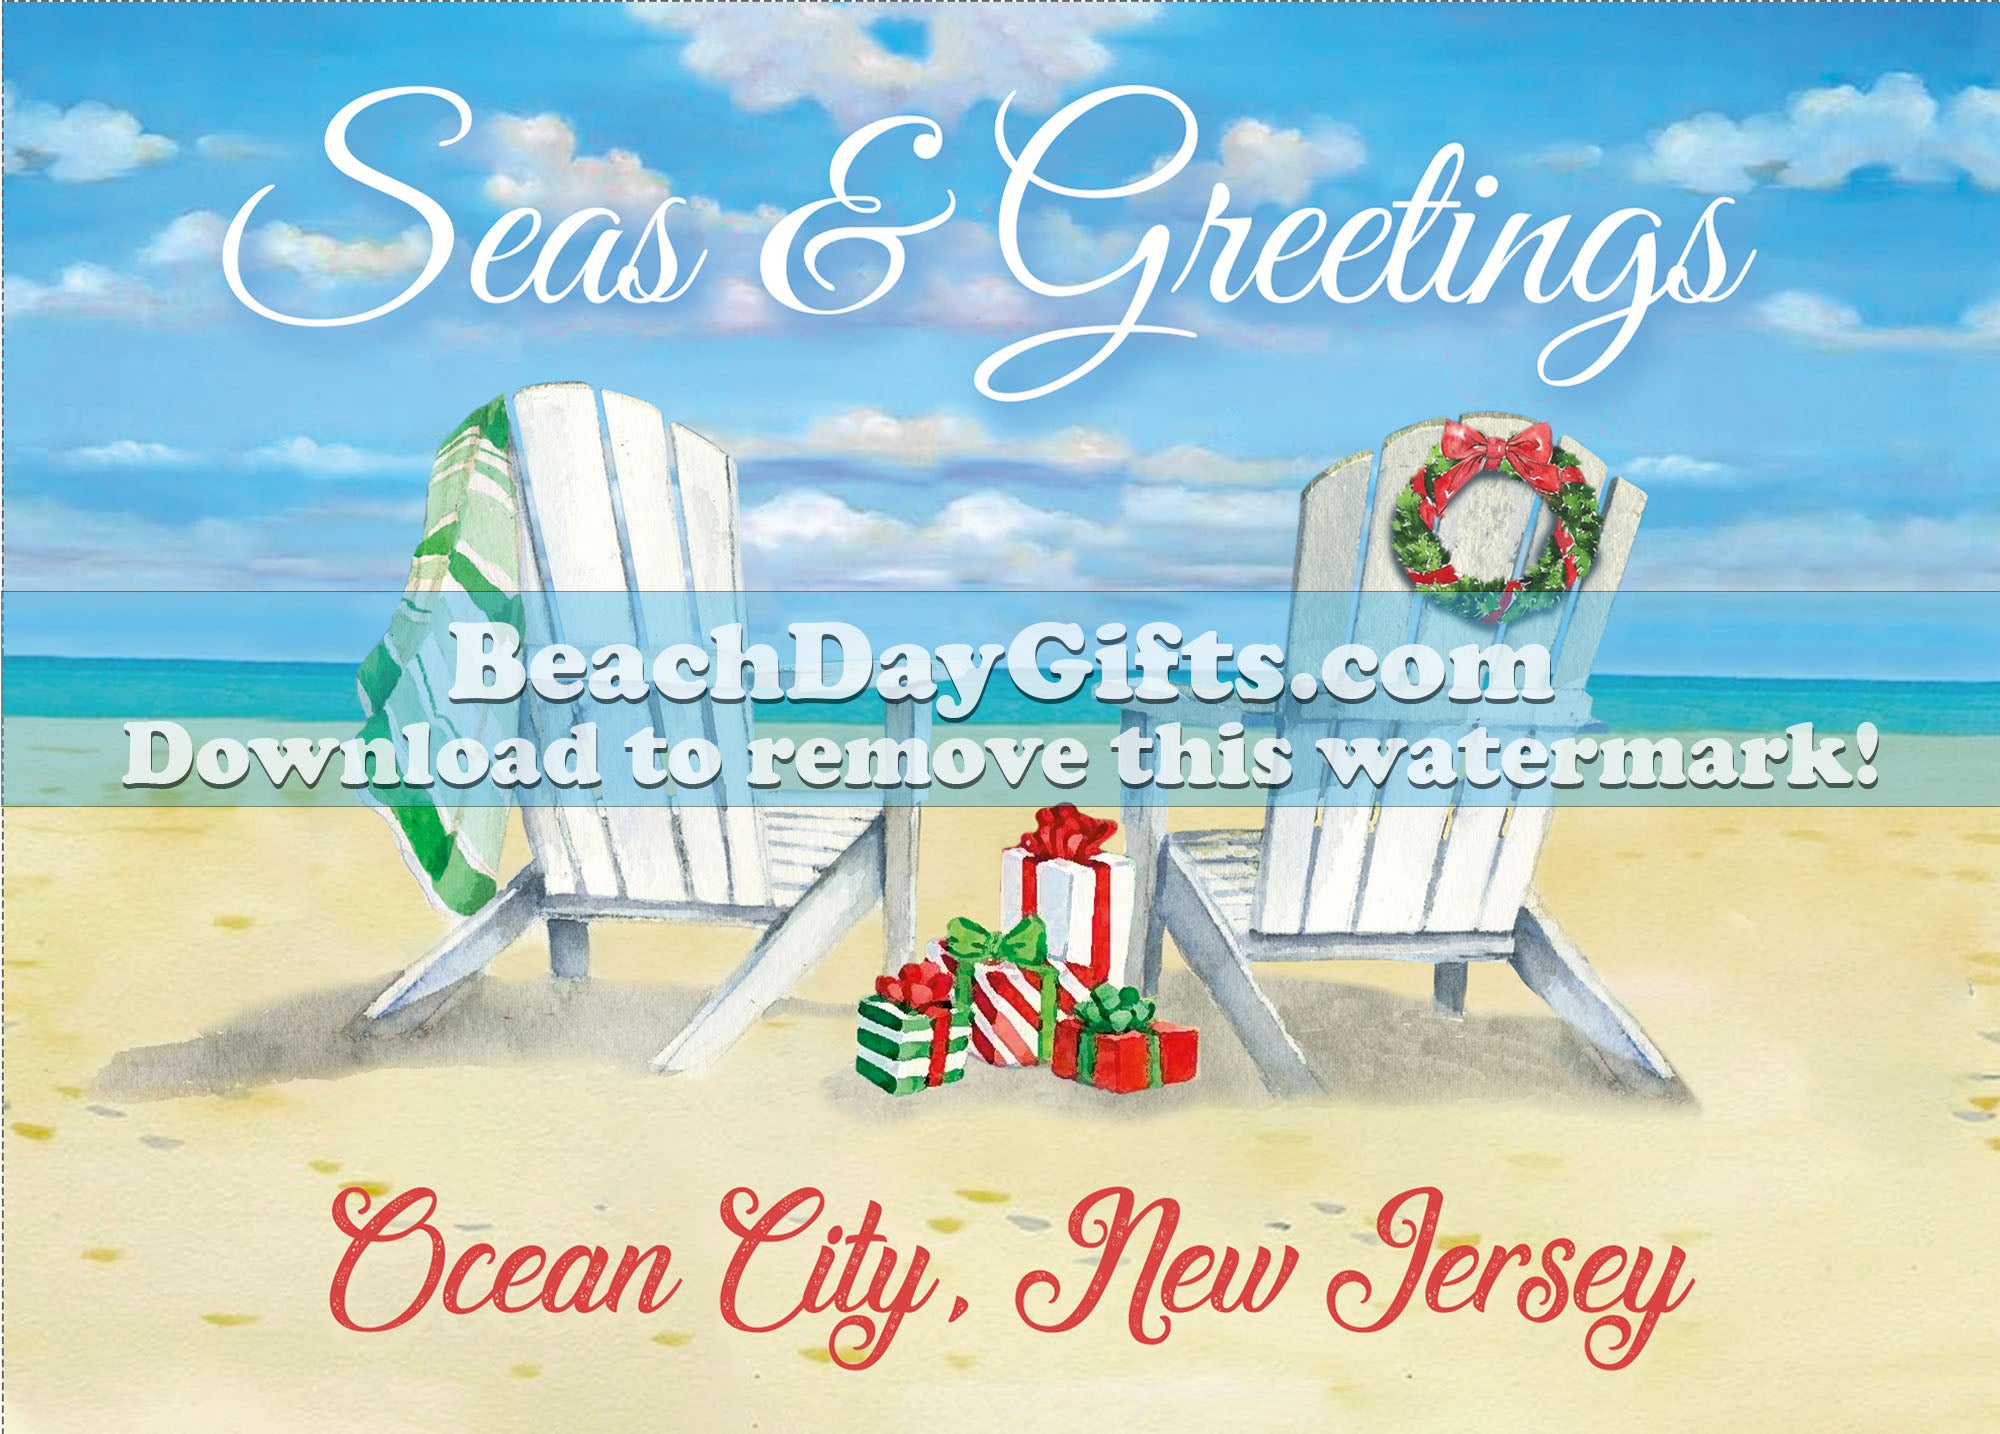 Ocean City NJ Seas & Greetings Holiday Card - 5x7 inches - Printable Digital Download